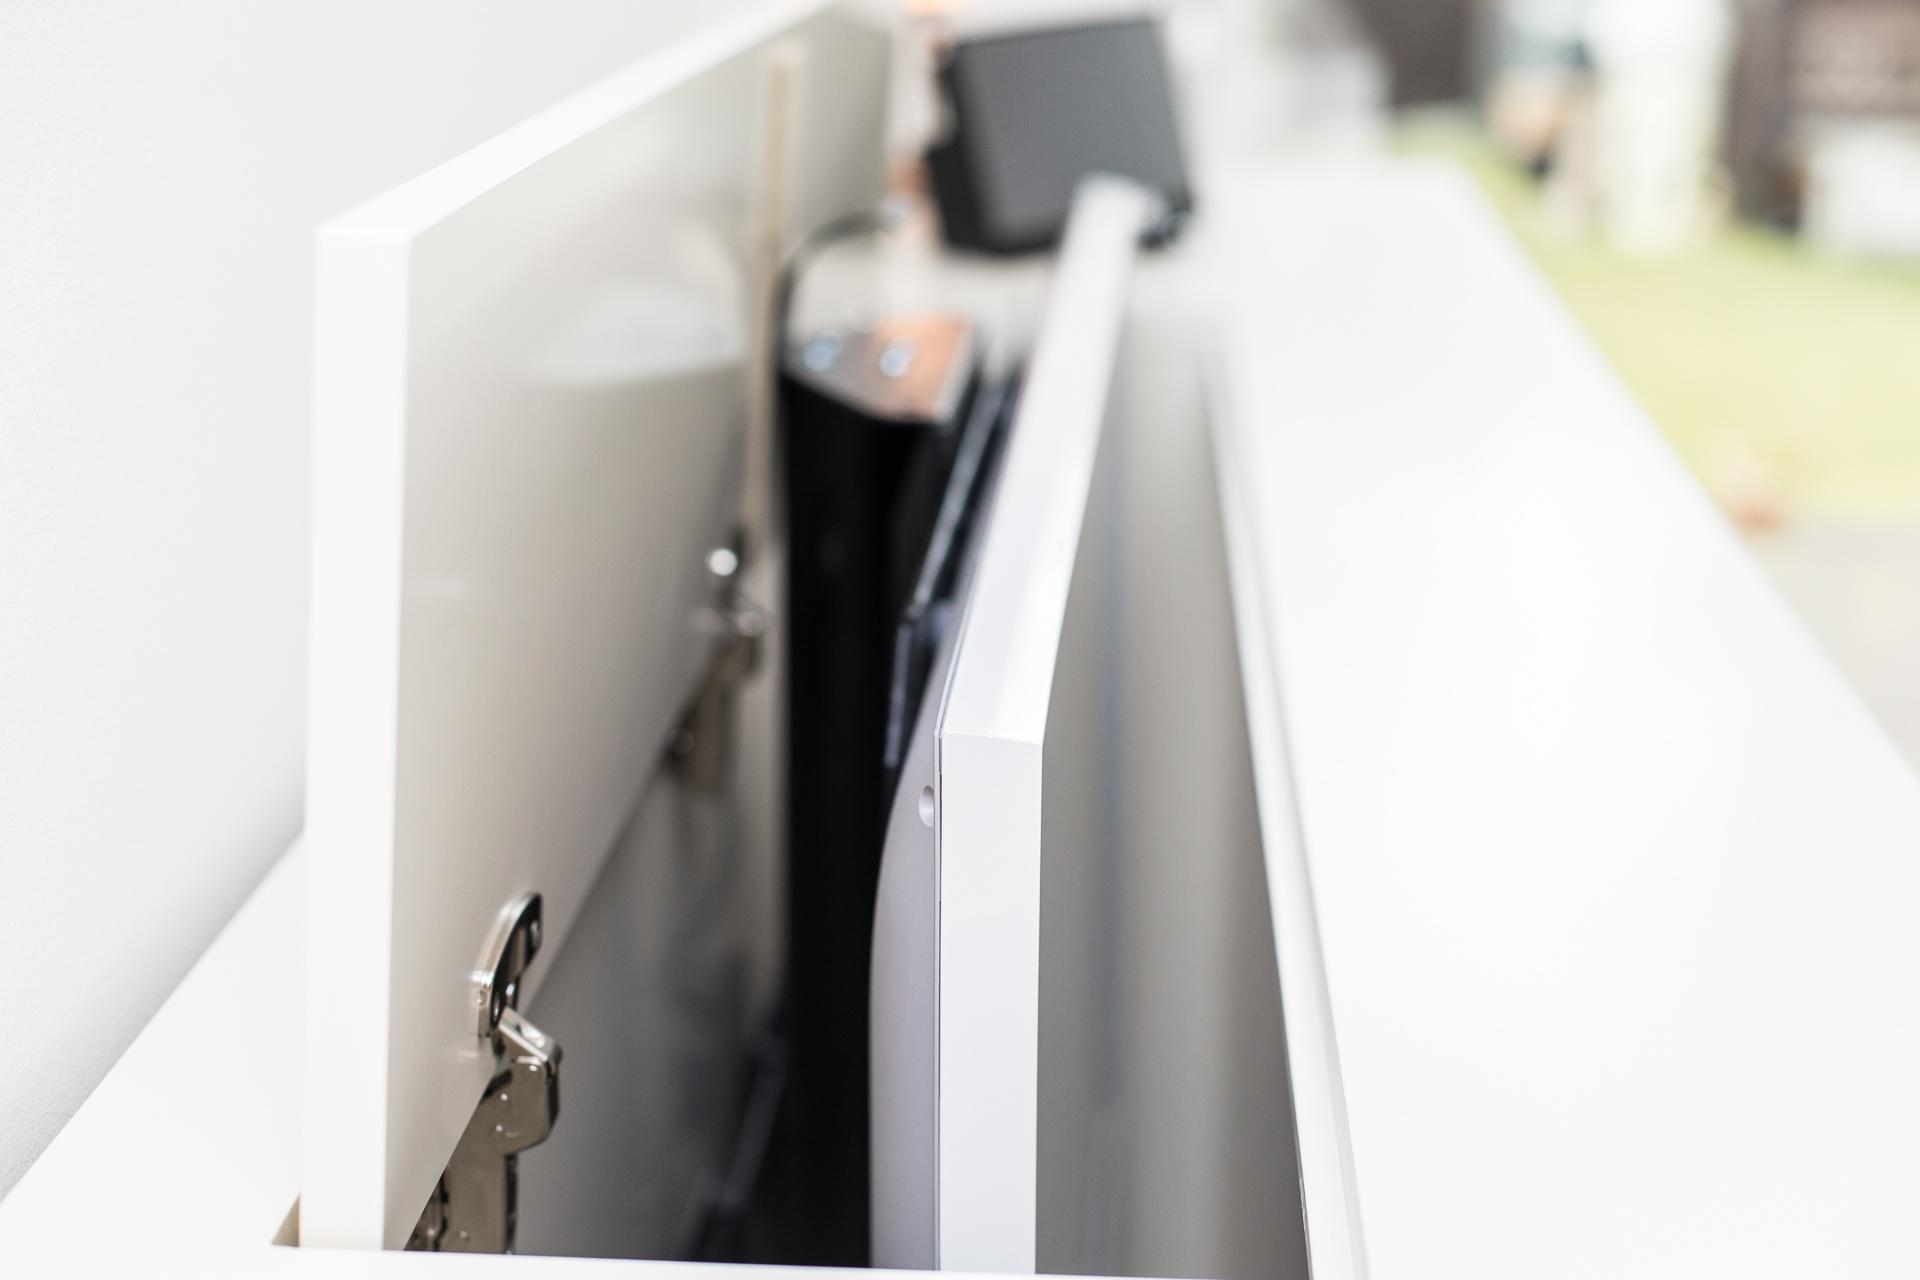 Lackierte Kommode mit integriertem TV-Lift #holzmöbel #sideboard ©Pickawood GmbH